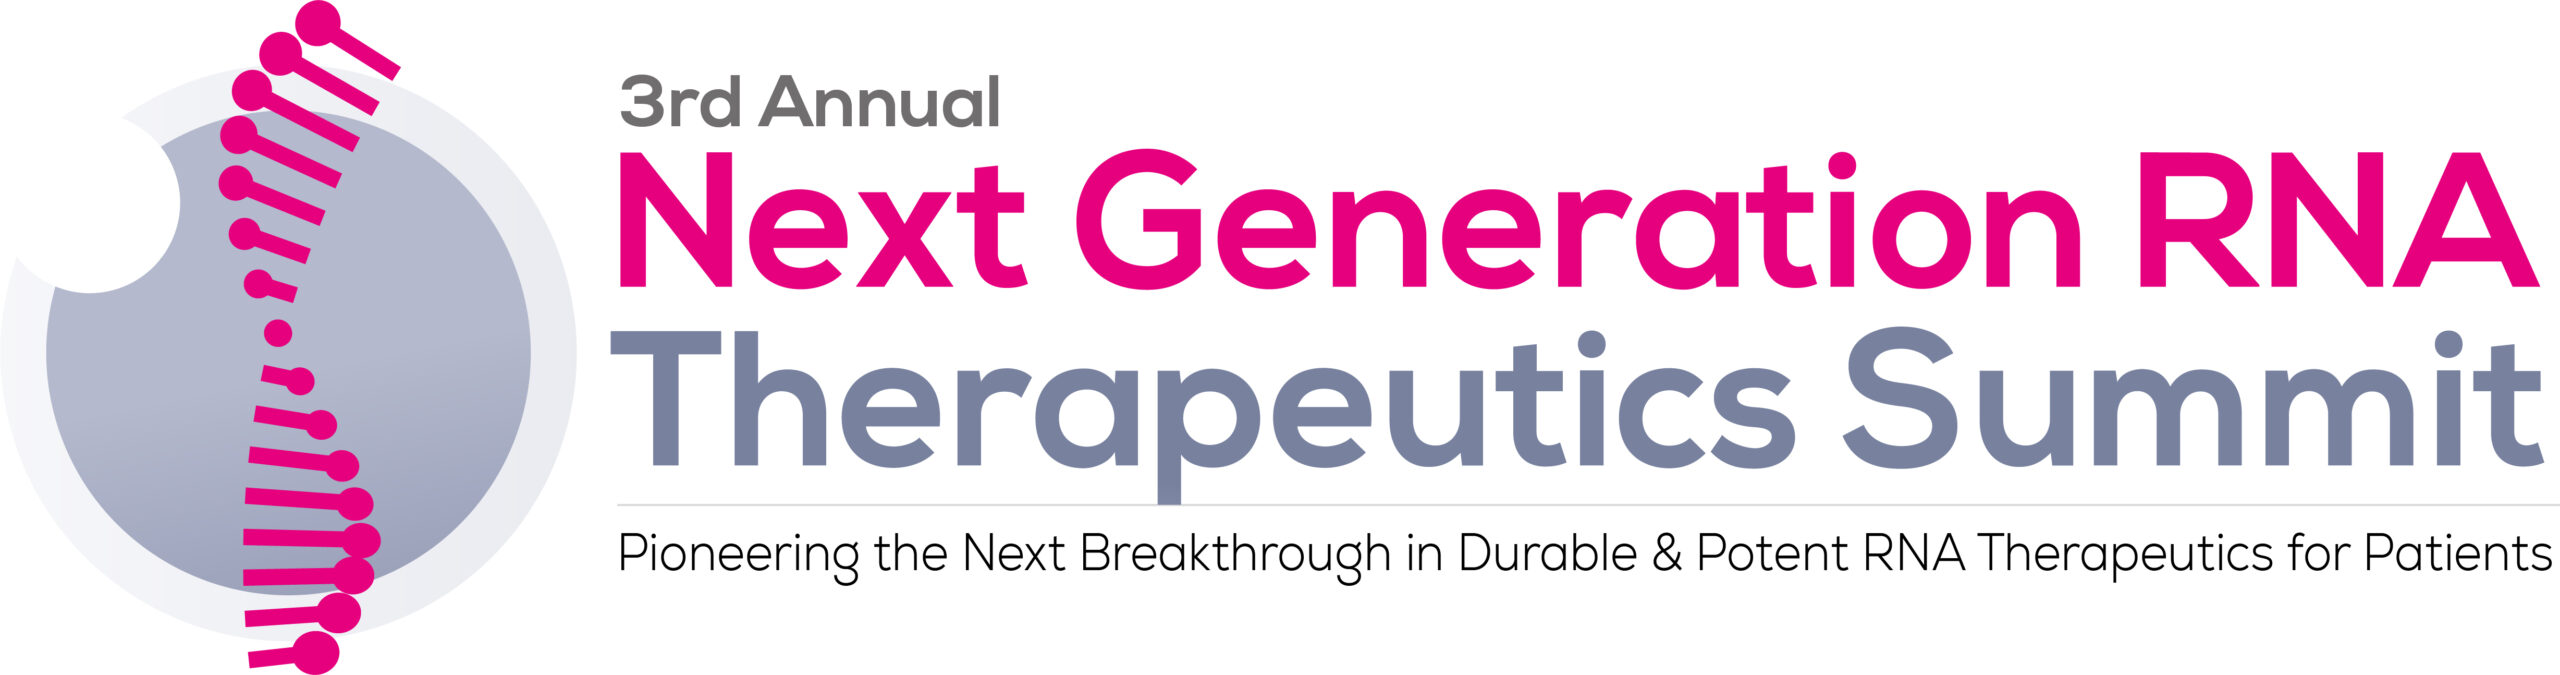 Register 3rd Next Generation RNA Therapeutics